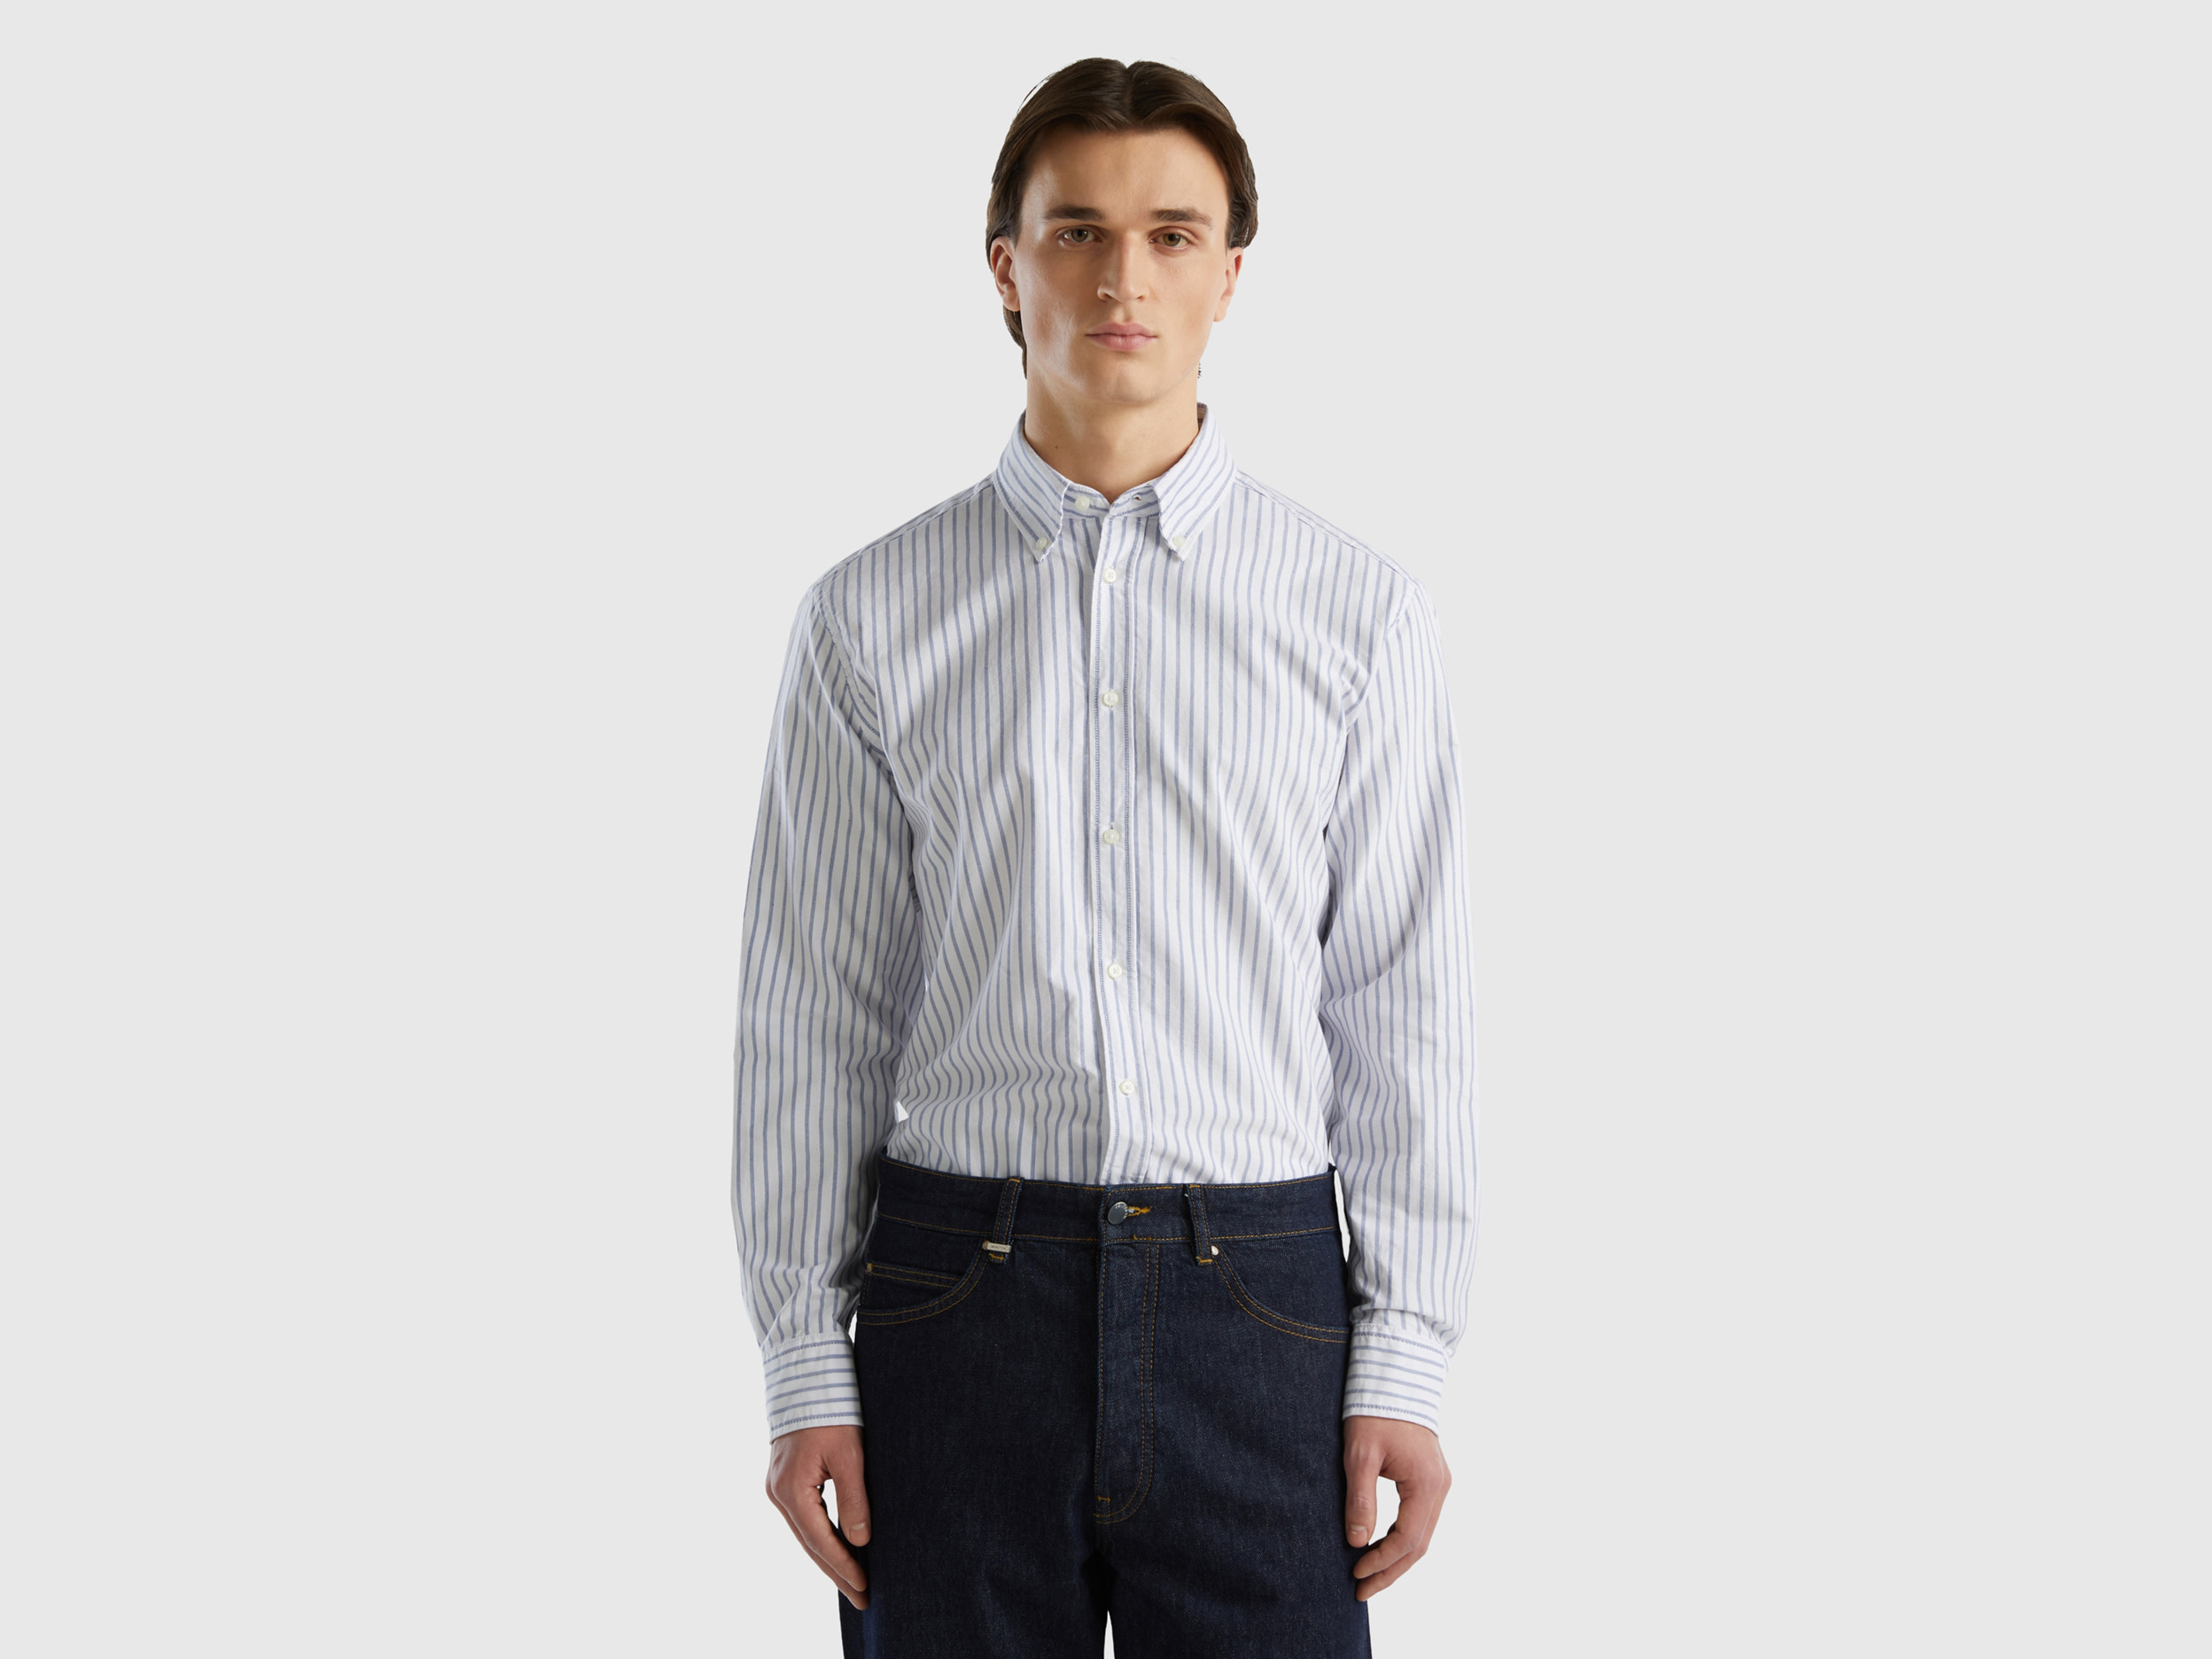 Benetton, 100% Cotton Striped Shirt, size XXL, Light Blue, Men